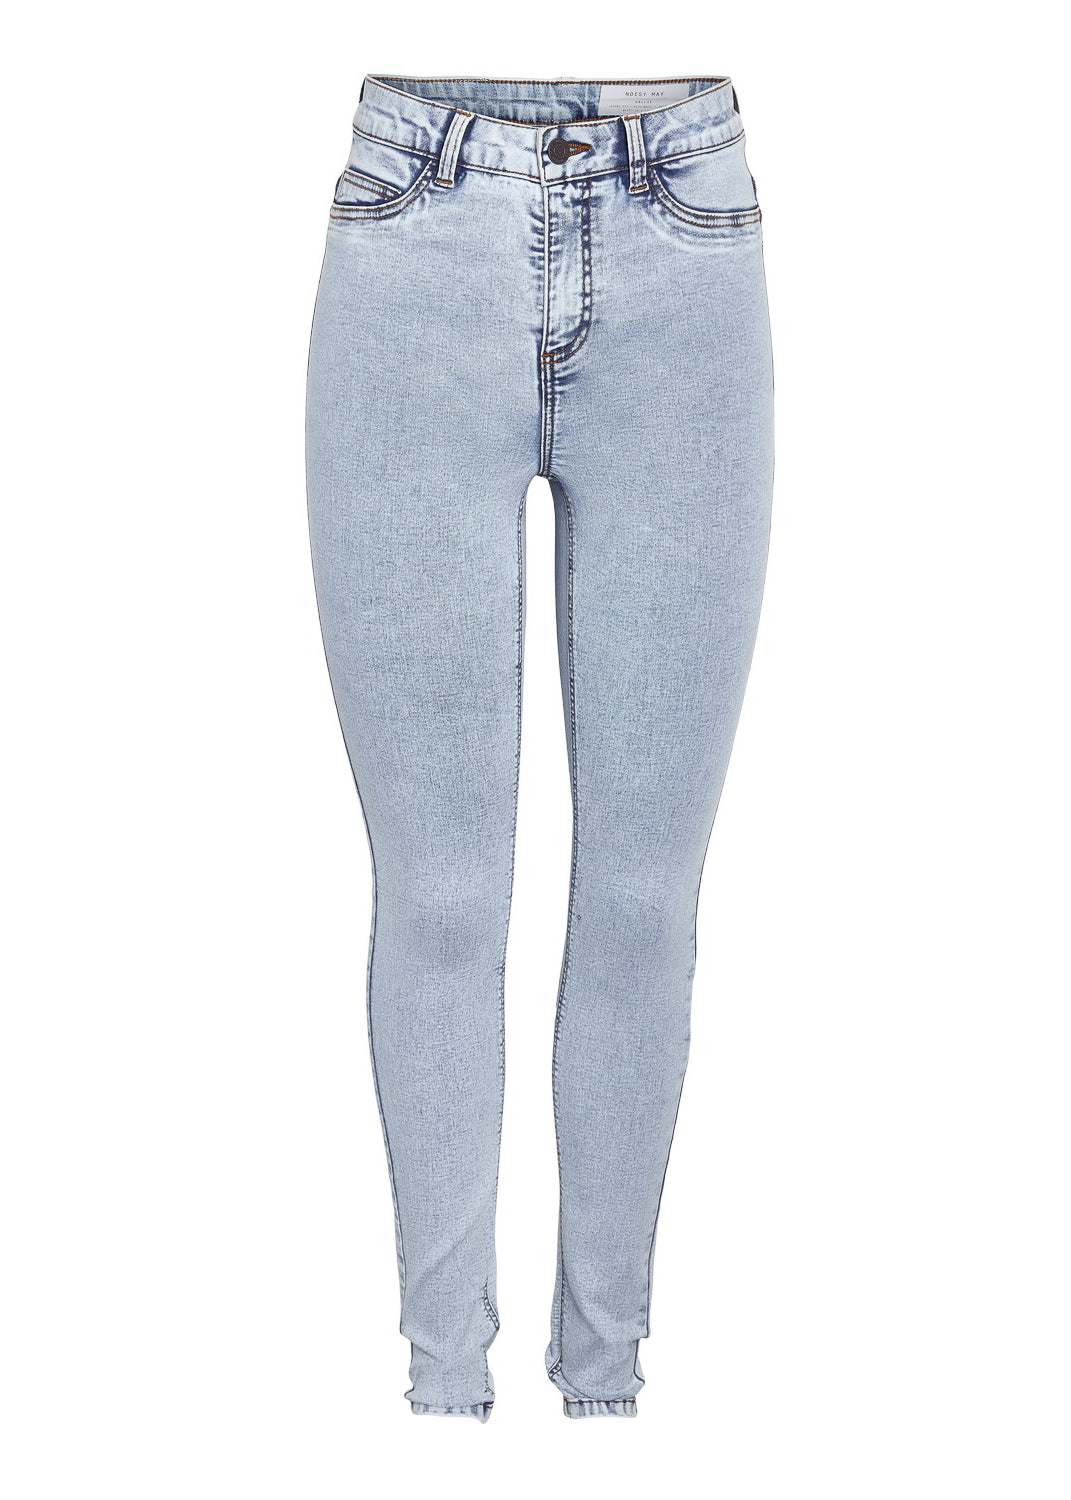 Callie Skinny Jeans - Washed Ultra Light Blue - for kvinde - NOISY MAY - Jeans